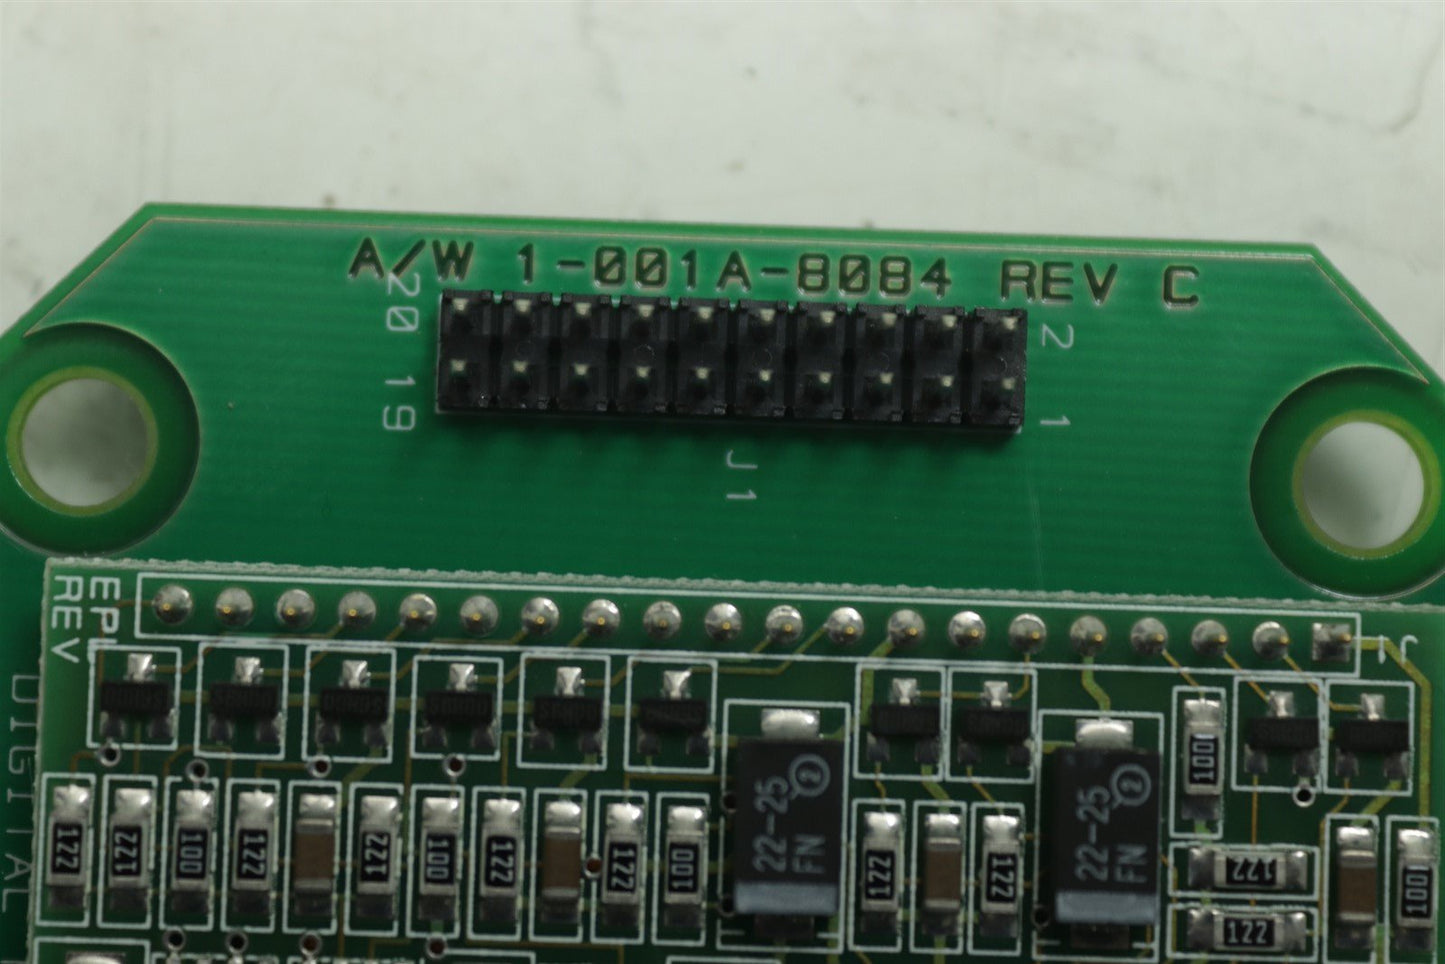 A/W 1-006A-8084 REV C PCB